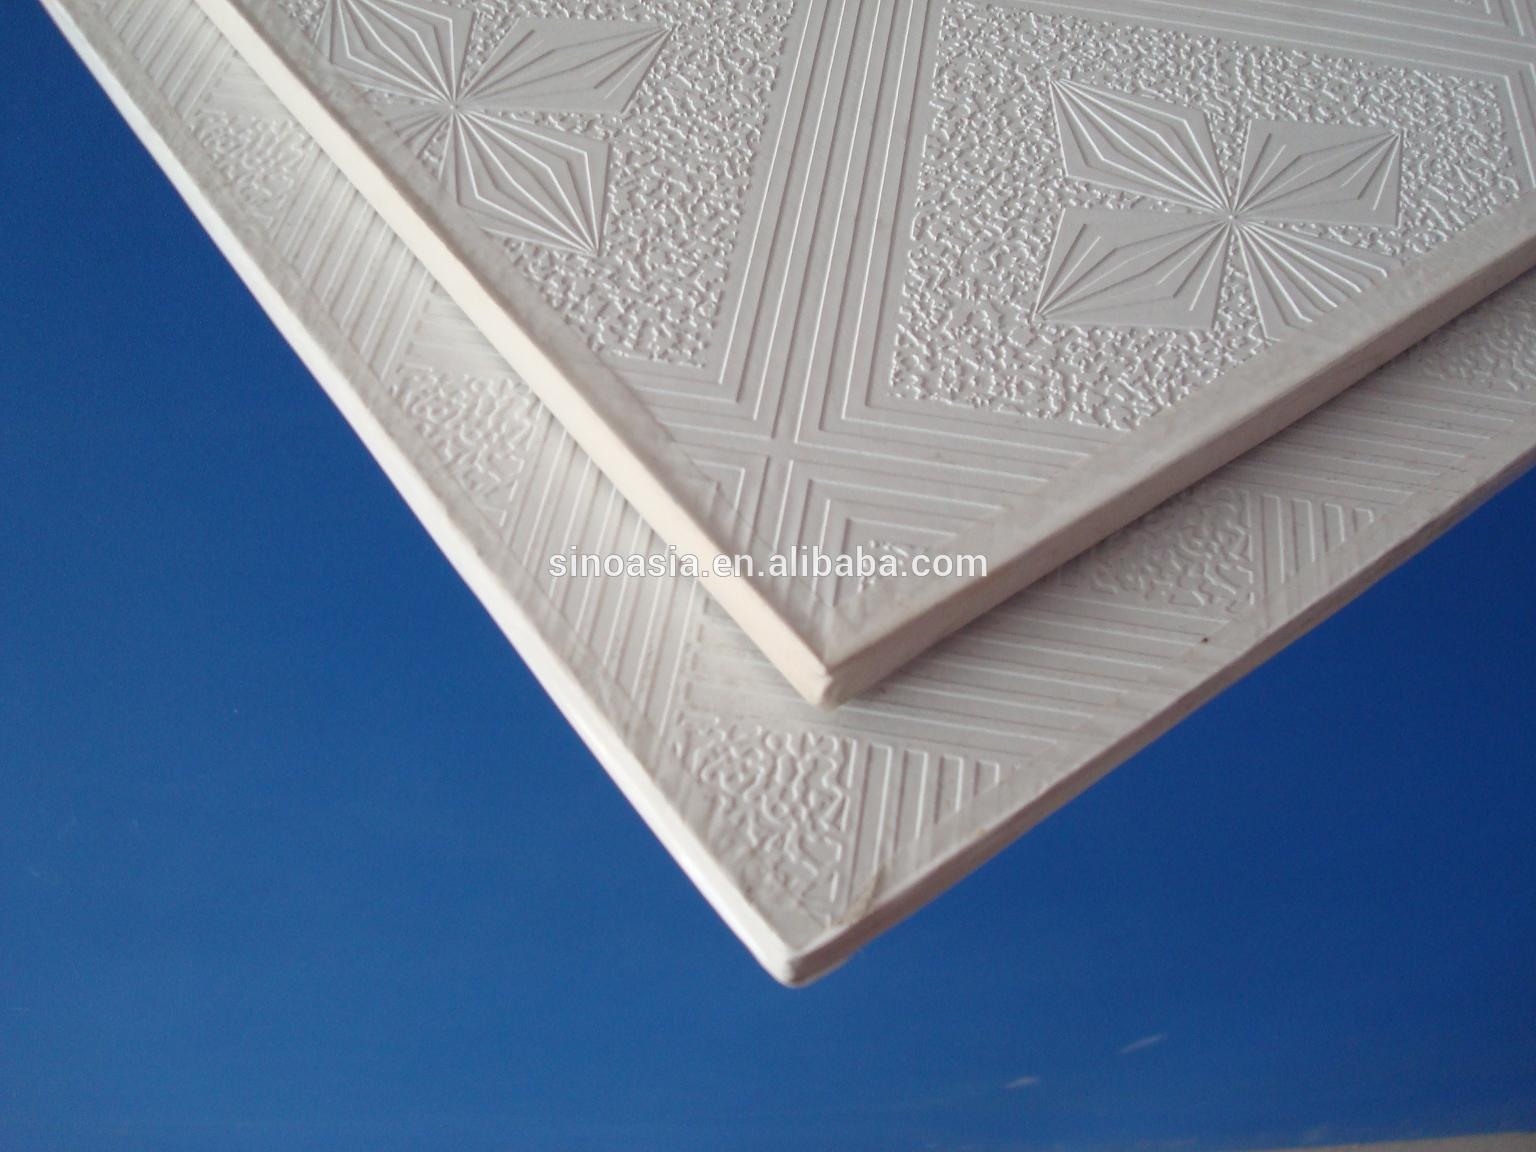 Vinyl Faced Plasterboard Ceiling Tiles